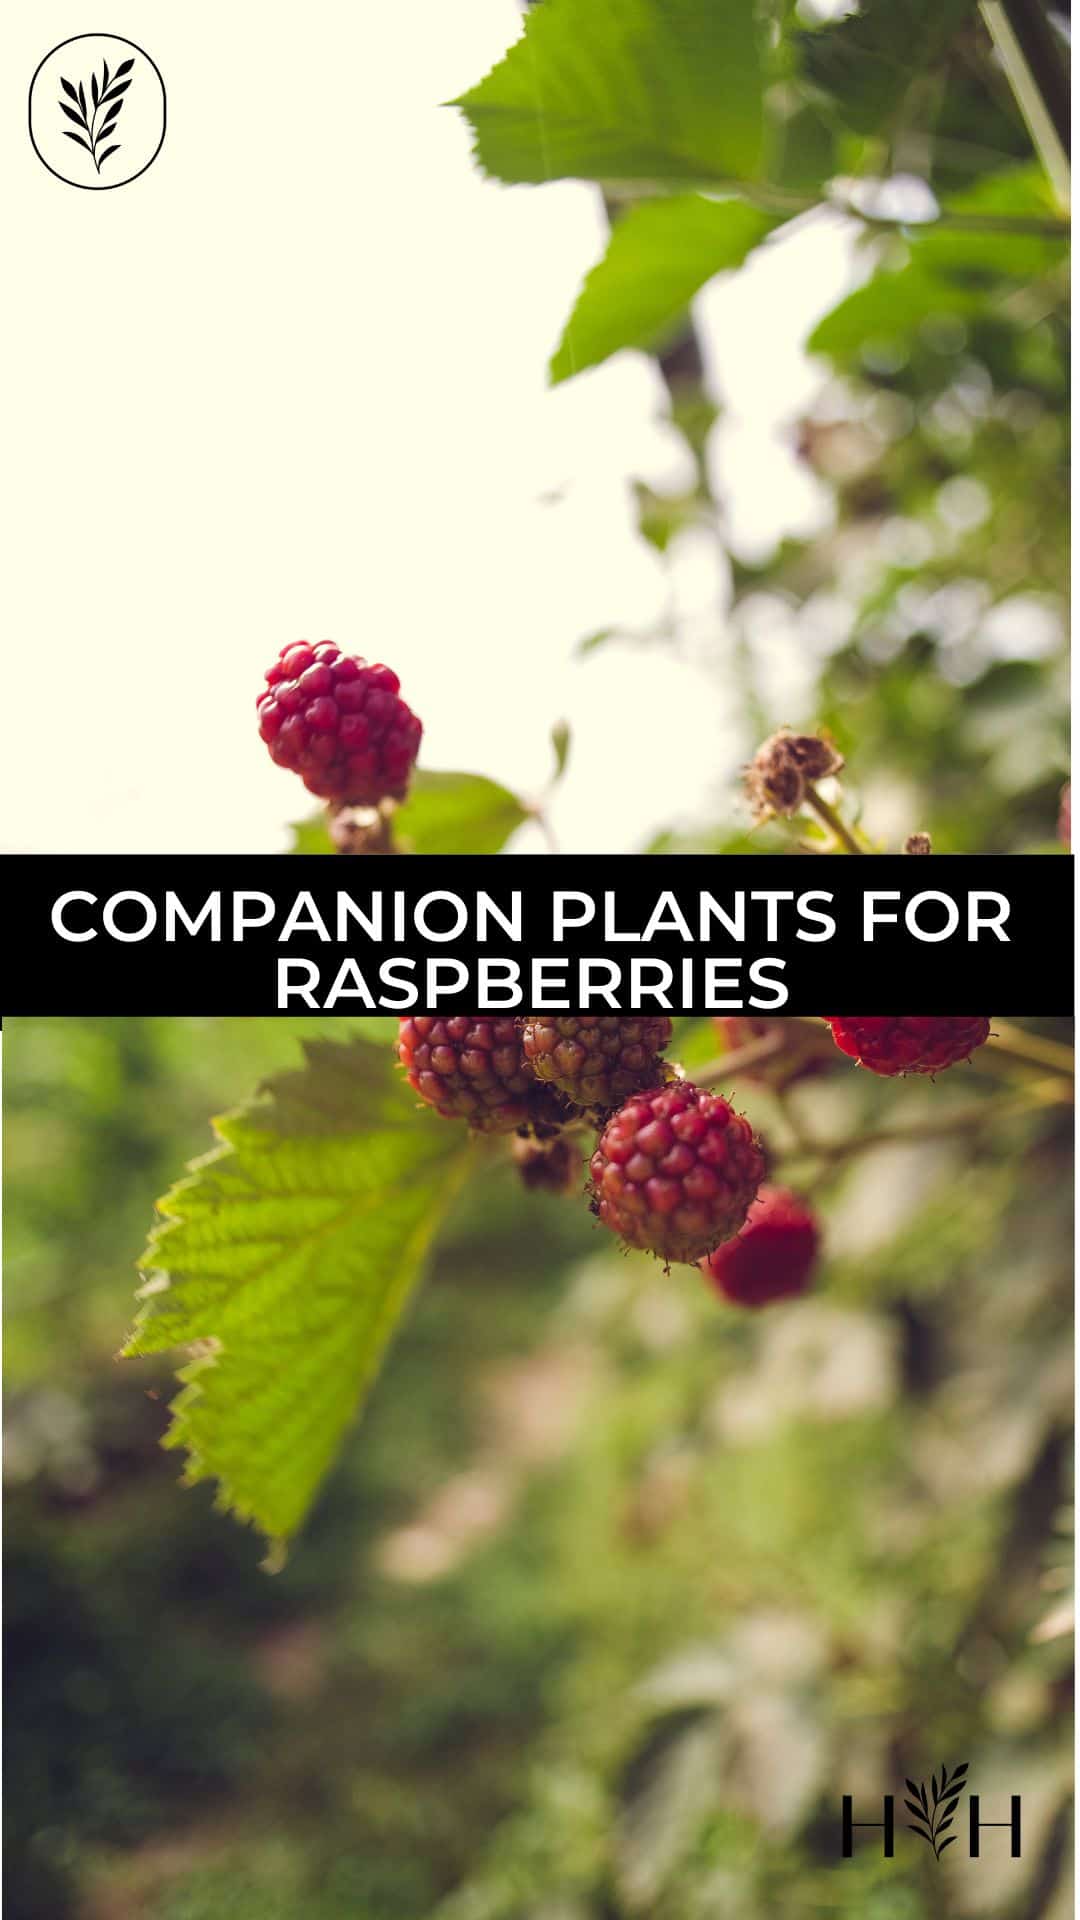 Companion plants for raspberries via @home4theharvest